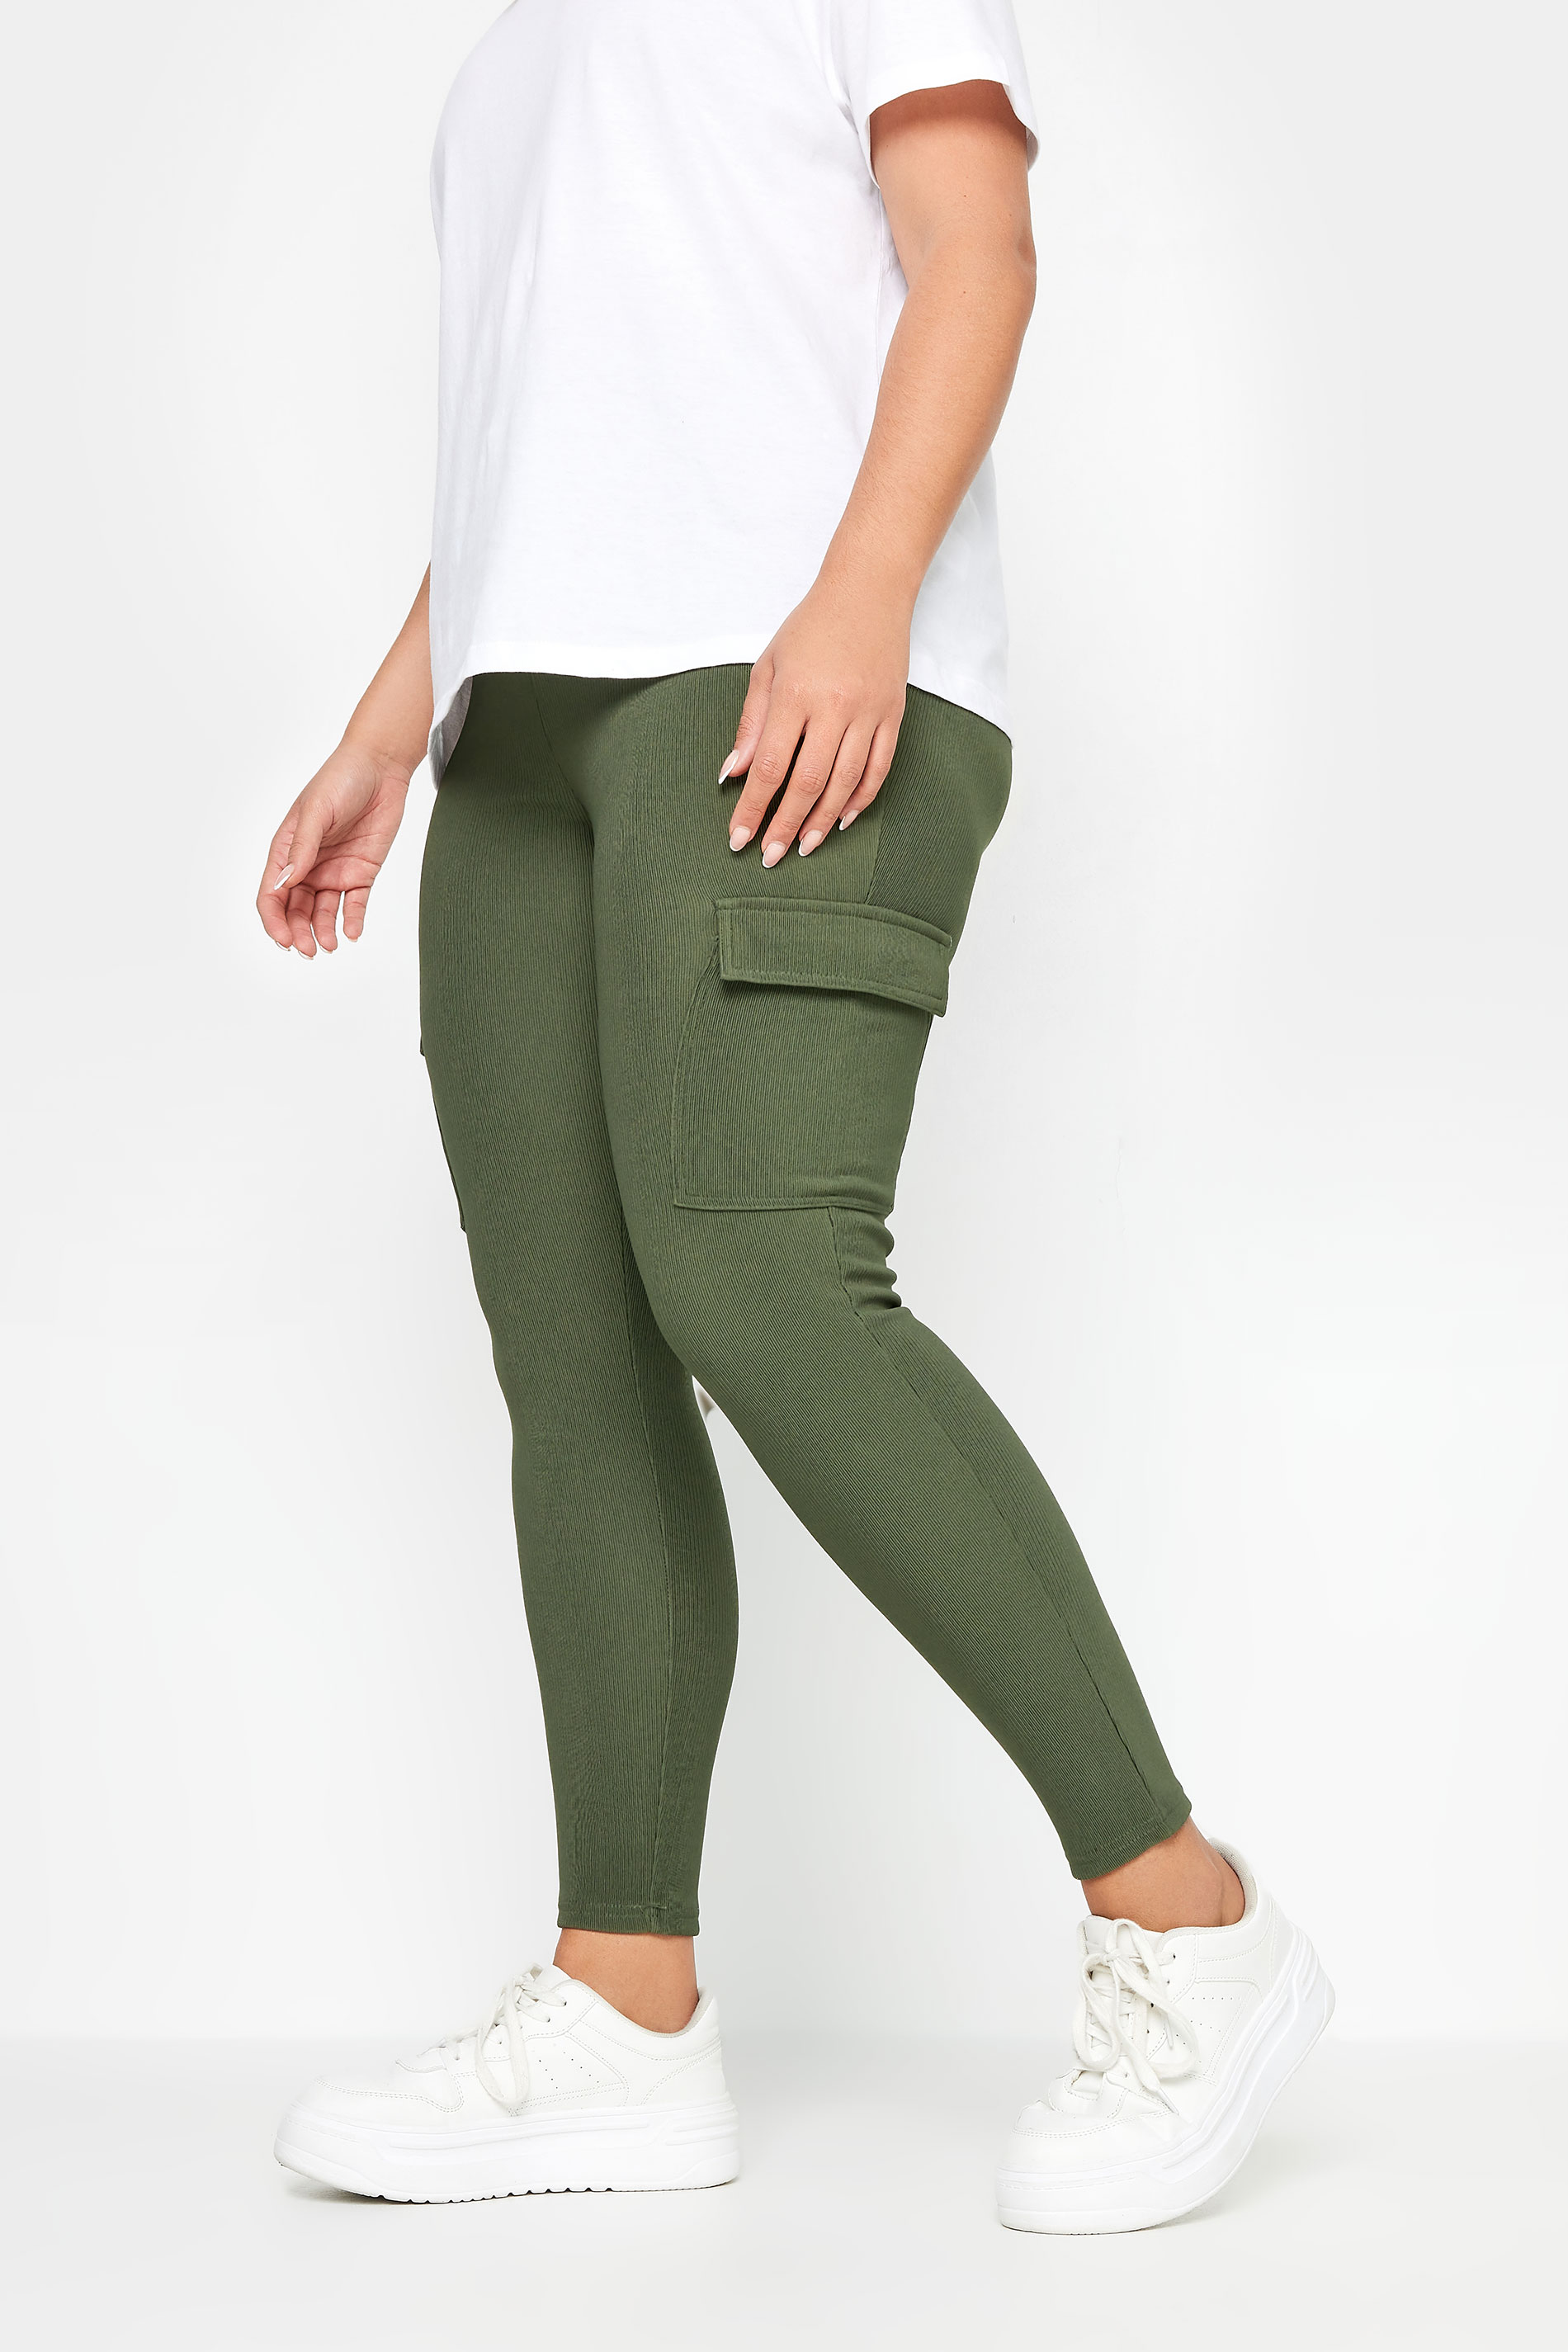 YOURS Plus Size Khaki Green Cargo Leggings | Yours Clothing 2